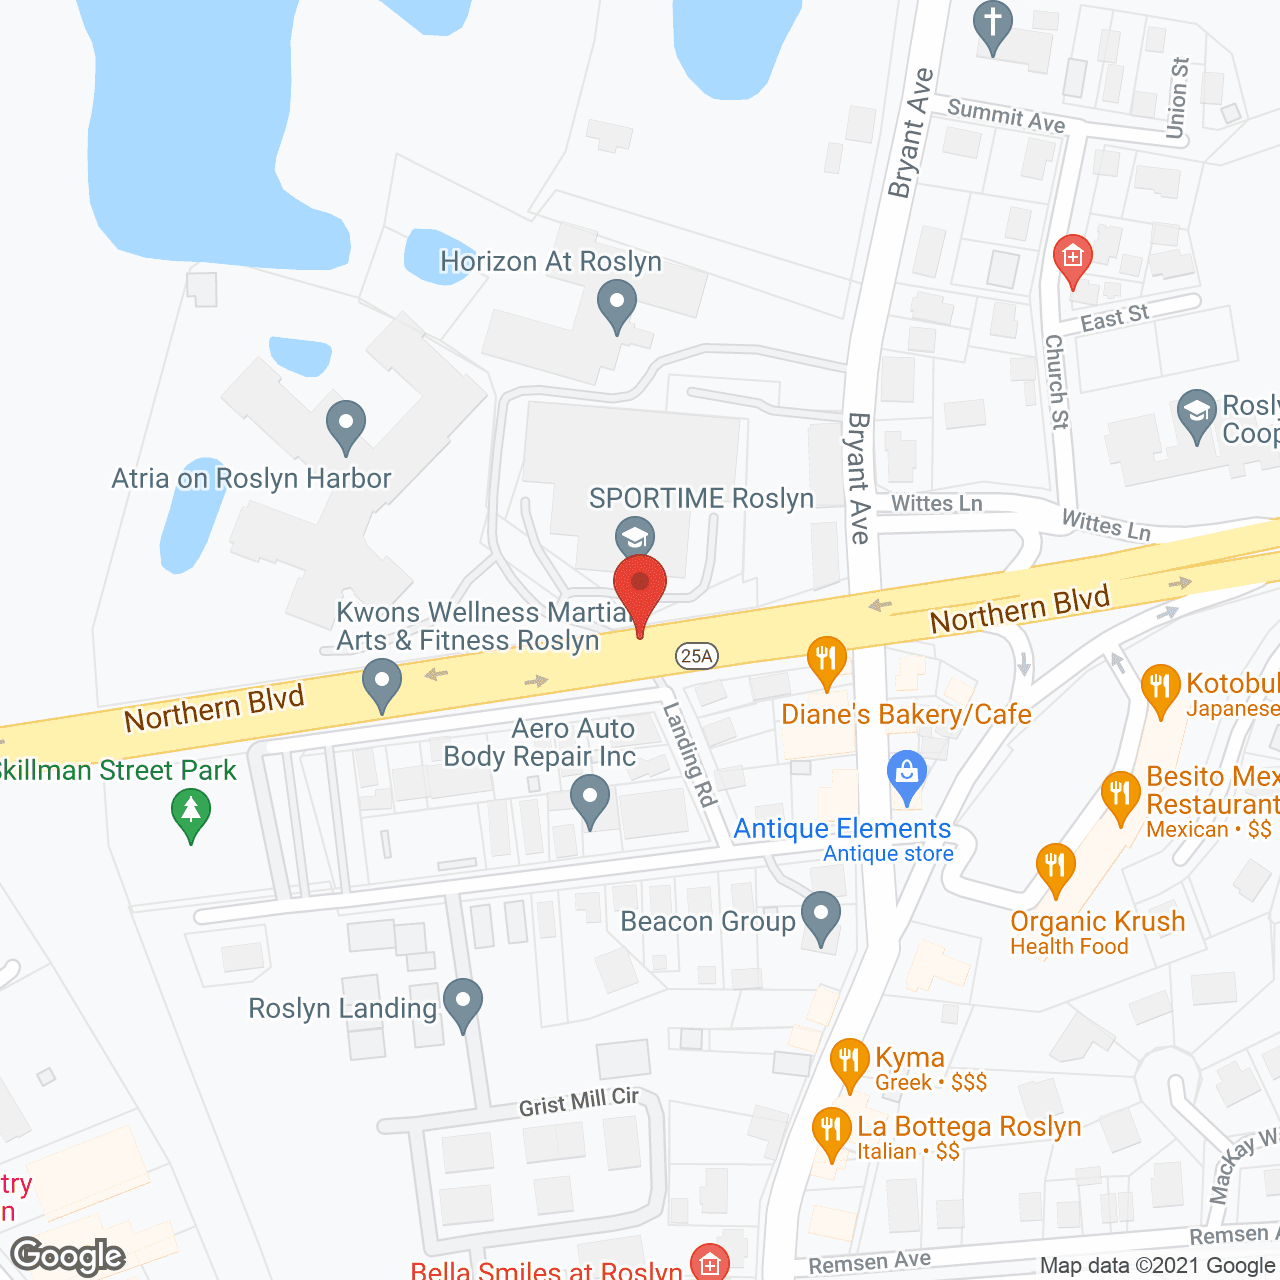 Atria on Roslyn Harbor in google map